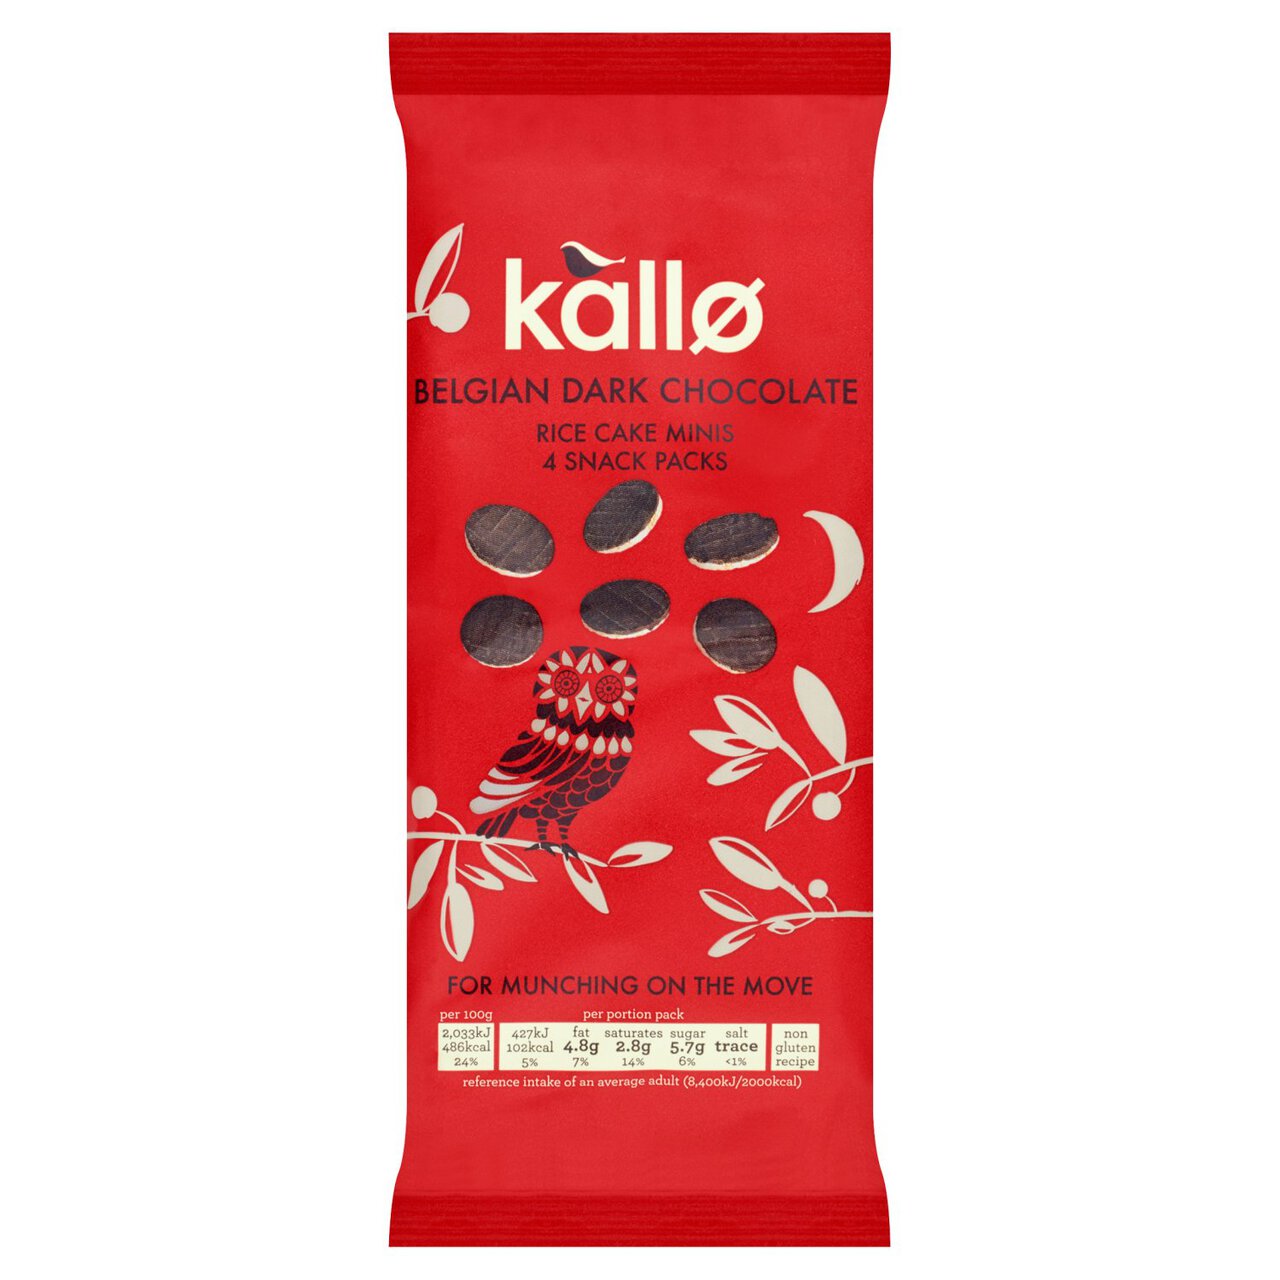 Kallo Belgian Dark Chocolate Mini Rice Cakes Multipack 4 x 21g